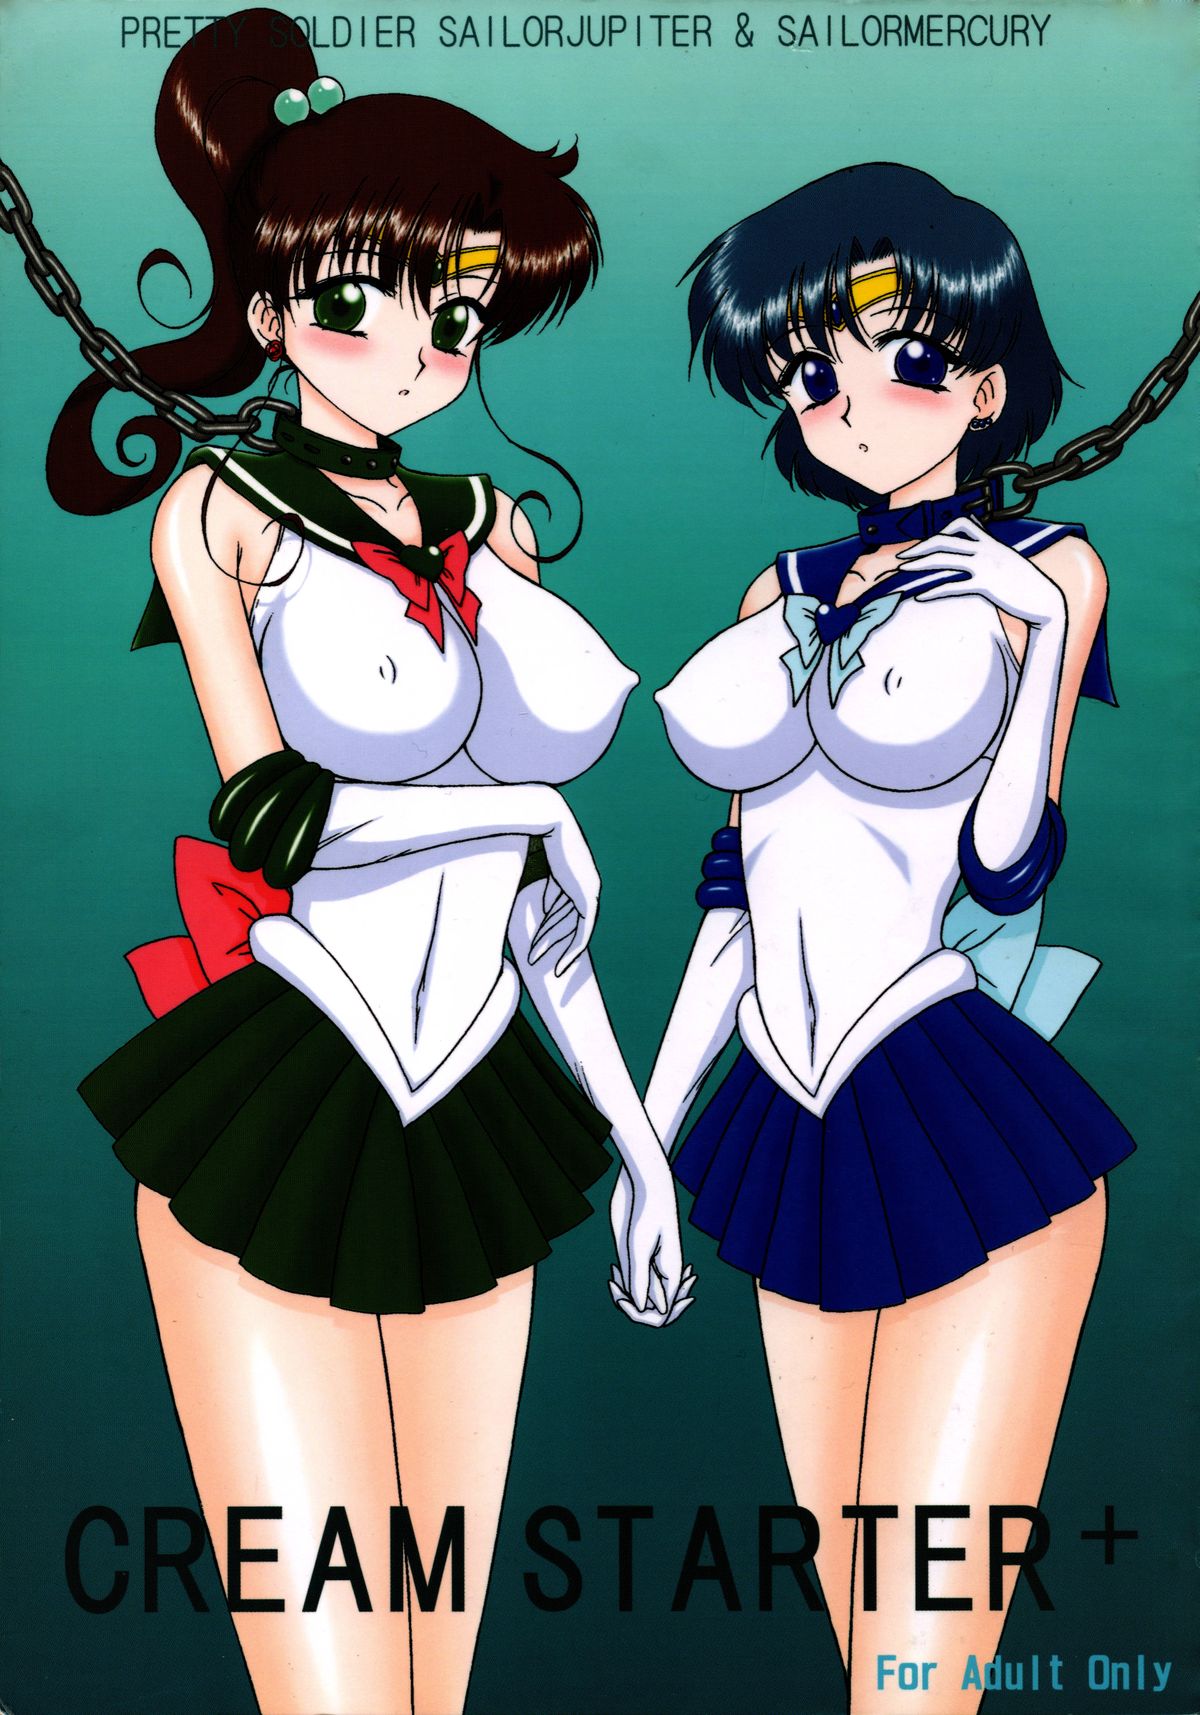 BLACK DOG (Kuroinu Juu)] Cream Starter+ (Bishoujo Senshi Sailor Moon) -  [BLACK DOG (Kuroinu Juu)] Cream Starter+ (Bishoujo Senshi Sailor Moon)  [English] [Tonigobe] - Free Hentai Manga, Adult Webtoon, Doujinshi Manga and